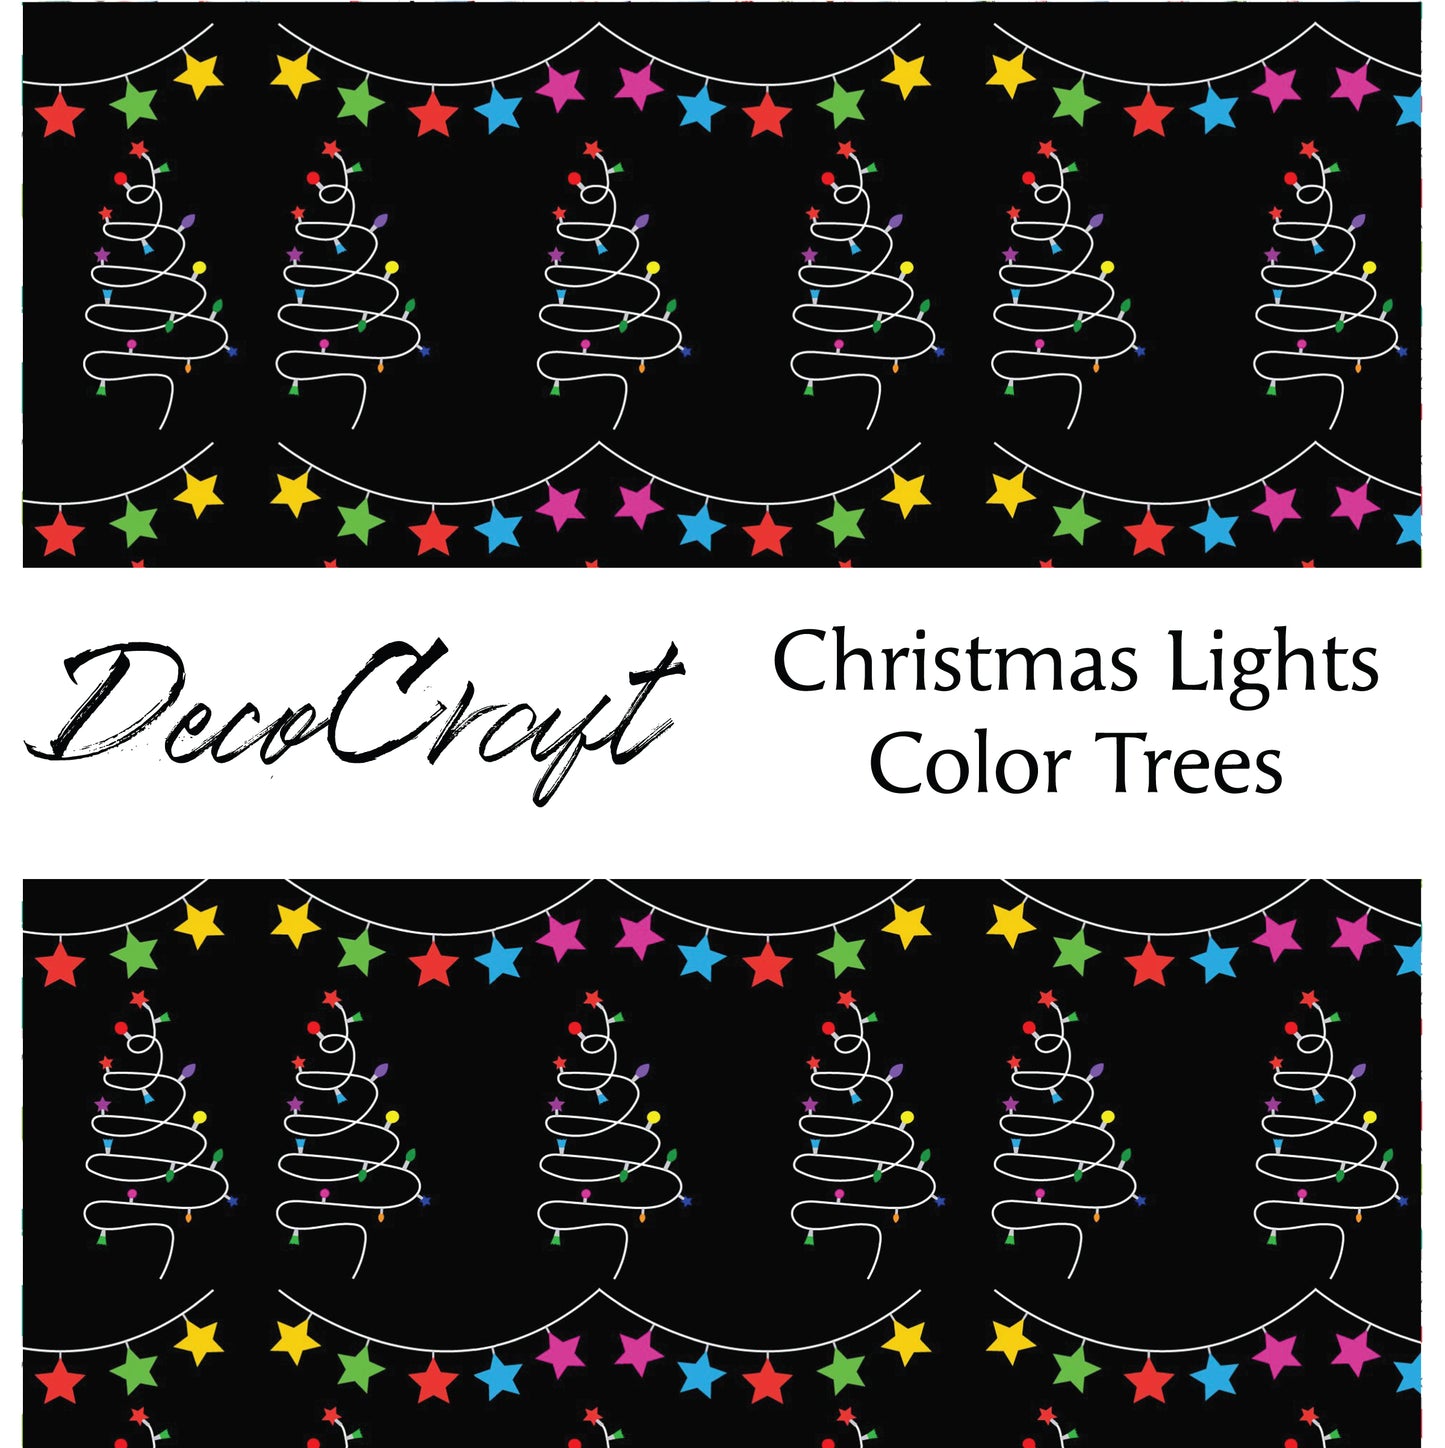 DecoCraft Christmas - Christmas Lights Color Trees